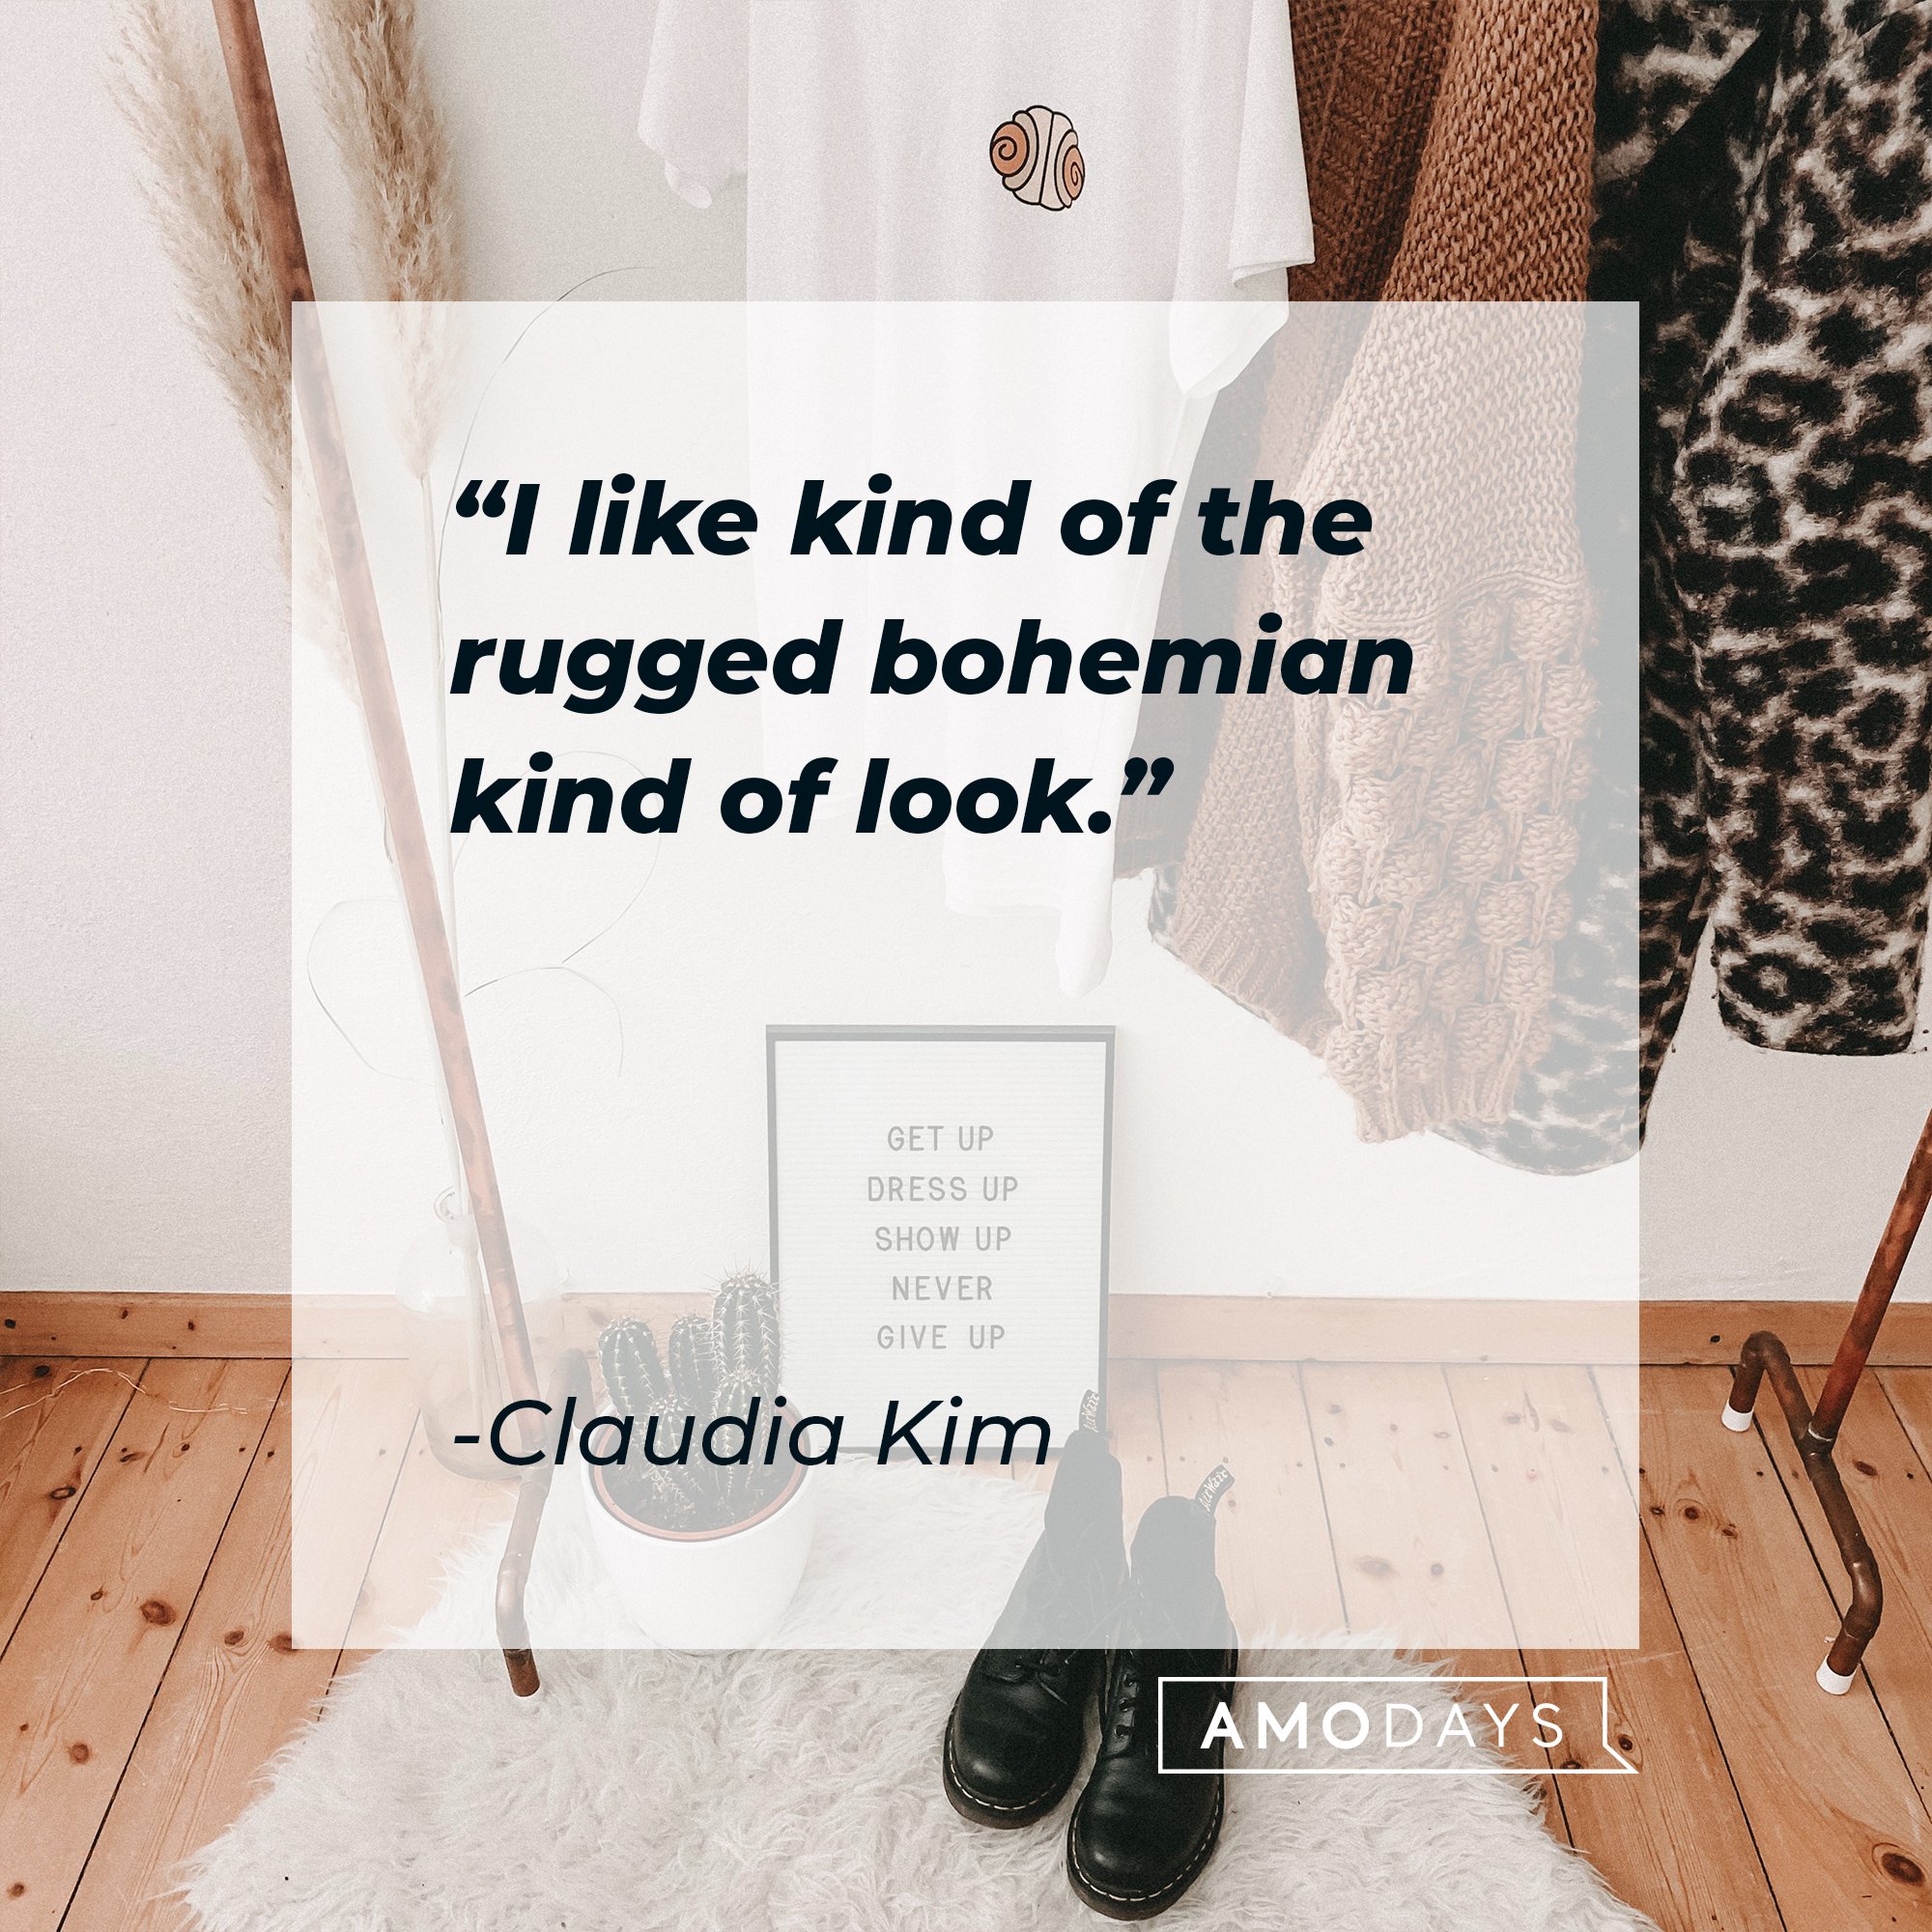 Claudia Kim's quote: "I like kind of the rugged bohemian kind of look." | Image: AmoDays 